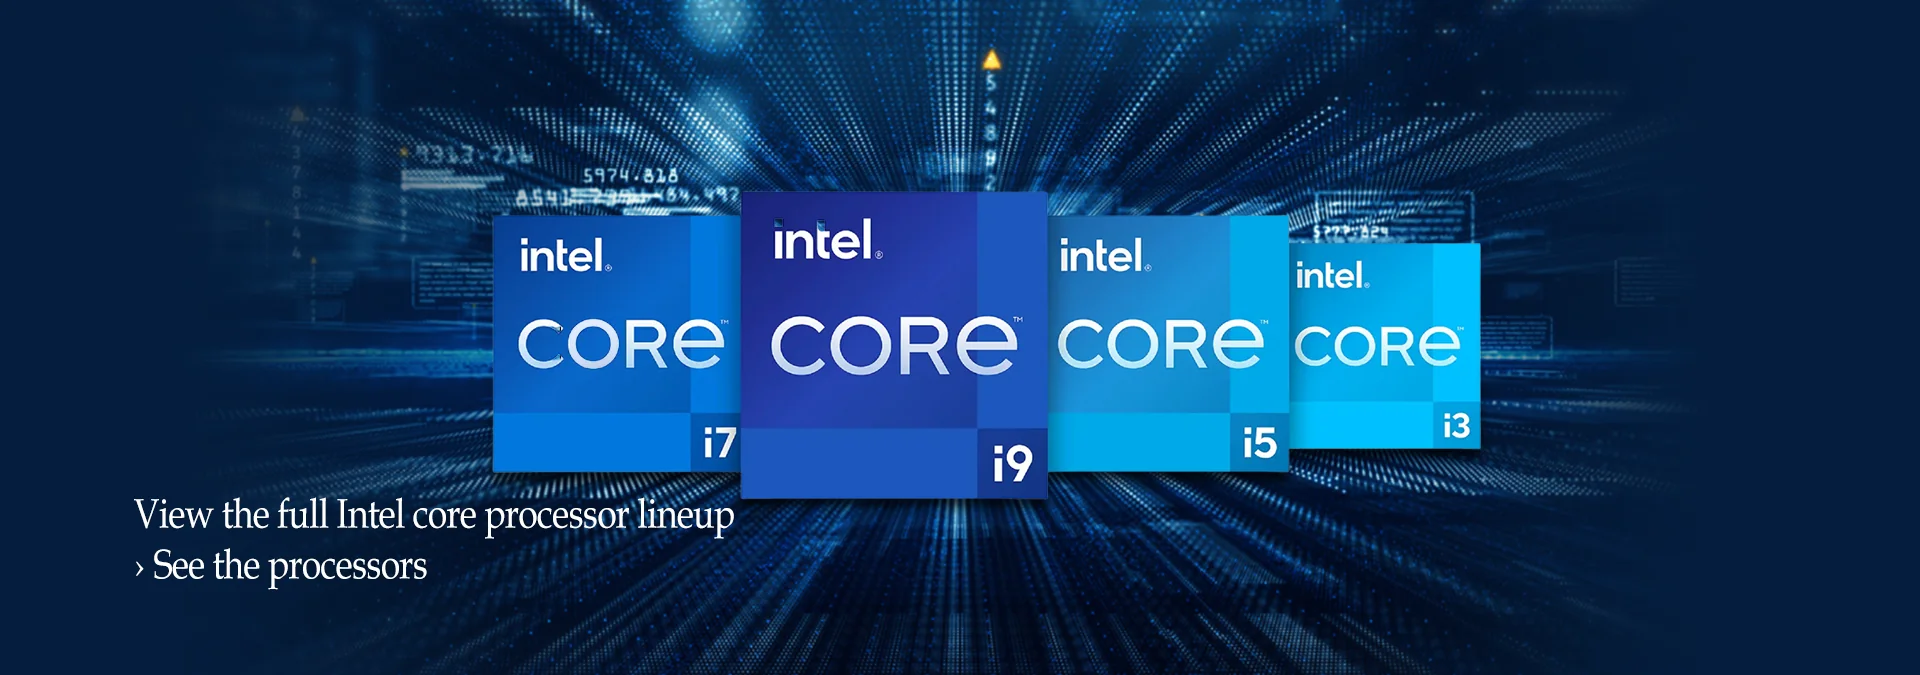 Intel Banner